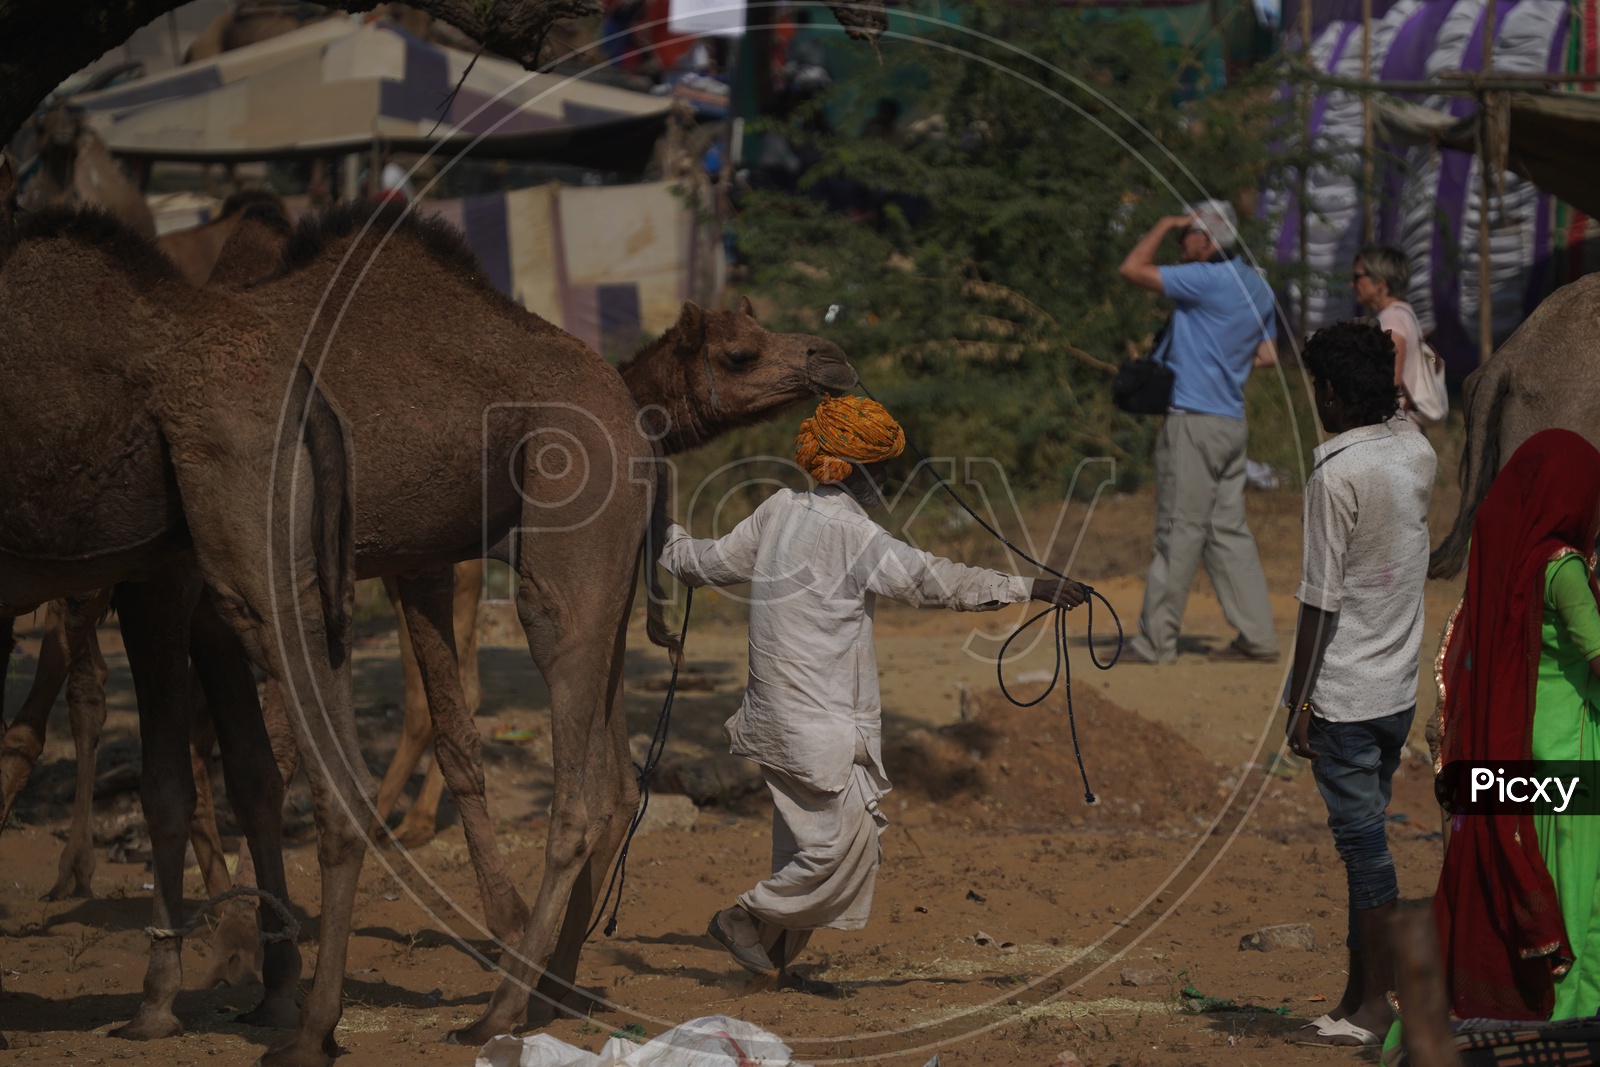 An Old Man With  His Camel  in Pushkar Camel fair